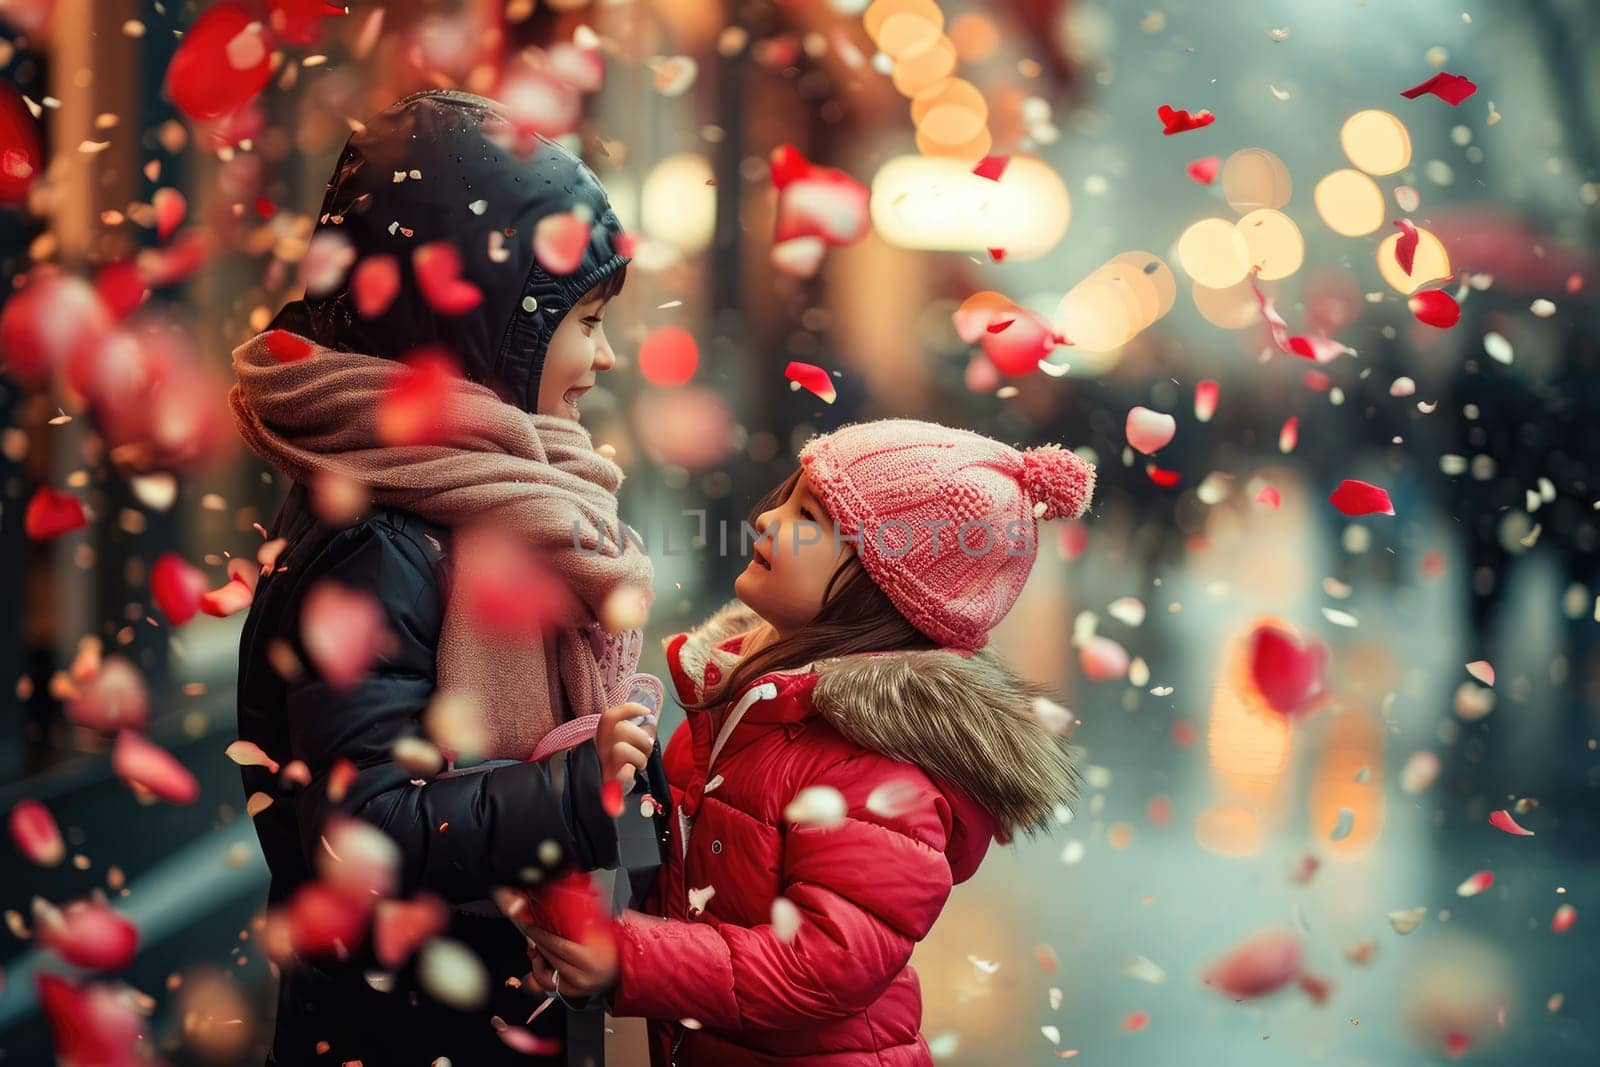 People in love celebrating valentines day the day of love pragma by biancoblue